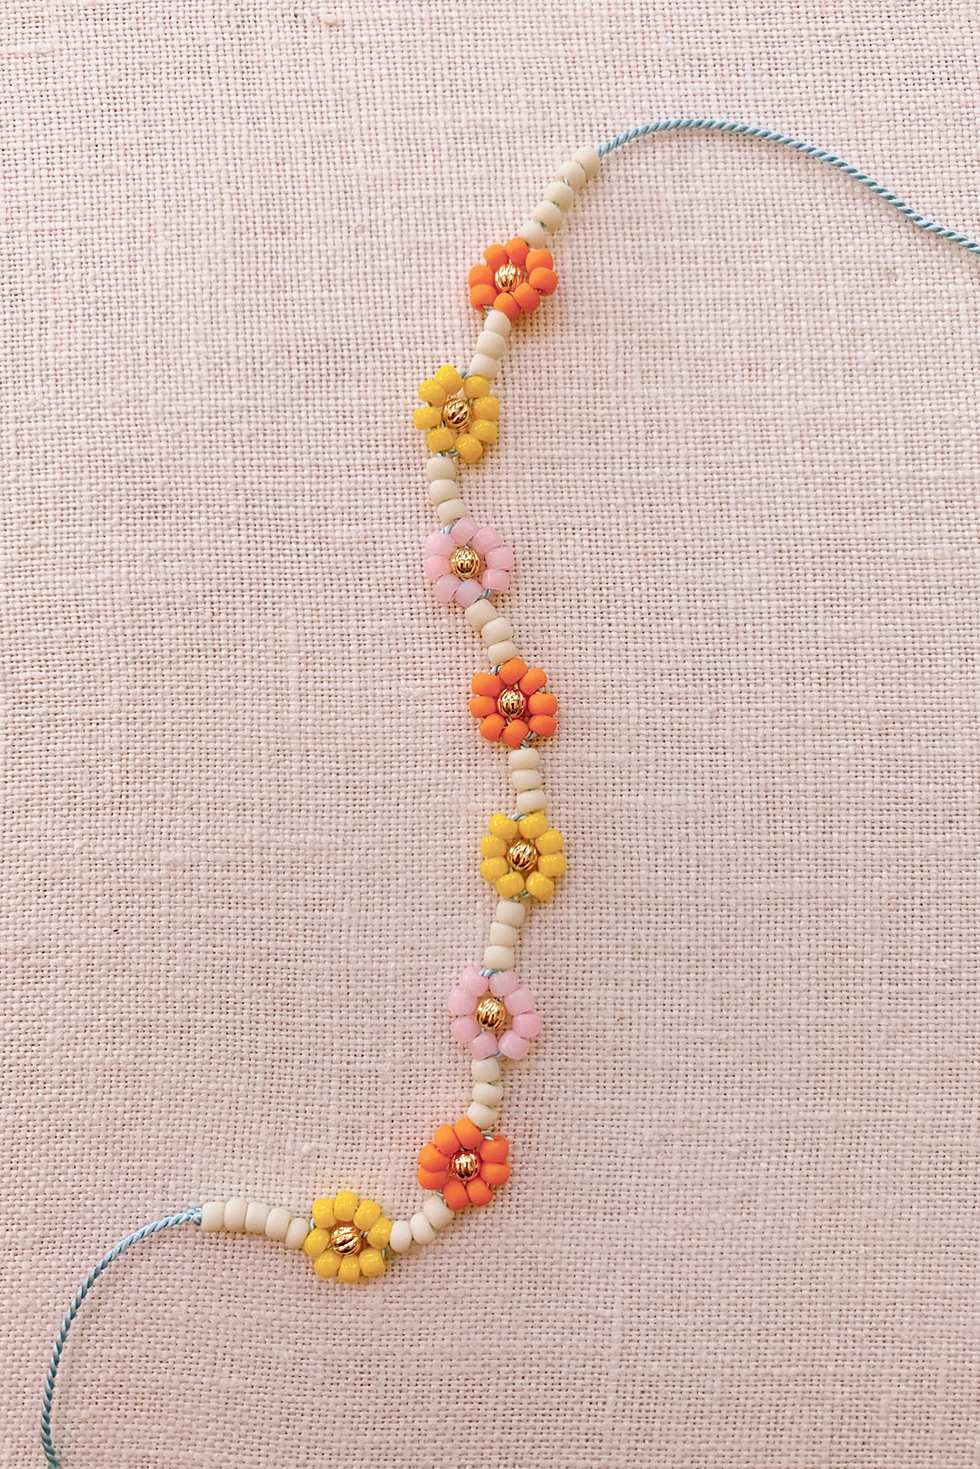 How to make a Flower Bracelet with Miyuki Seed Beads - Beads & Basics